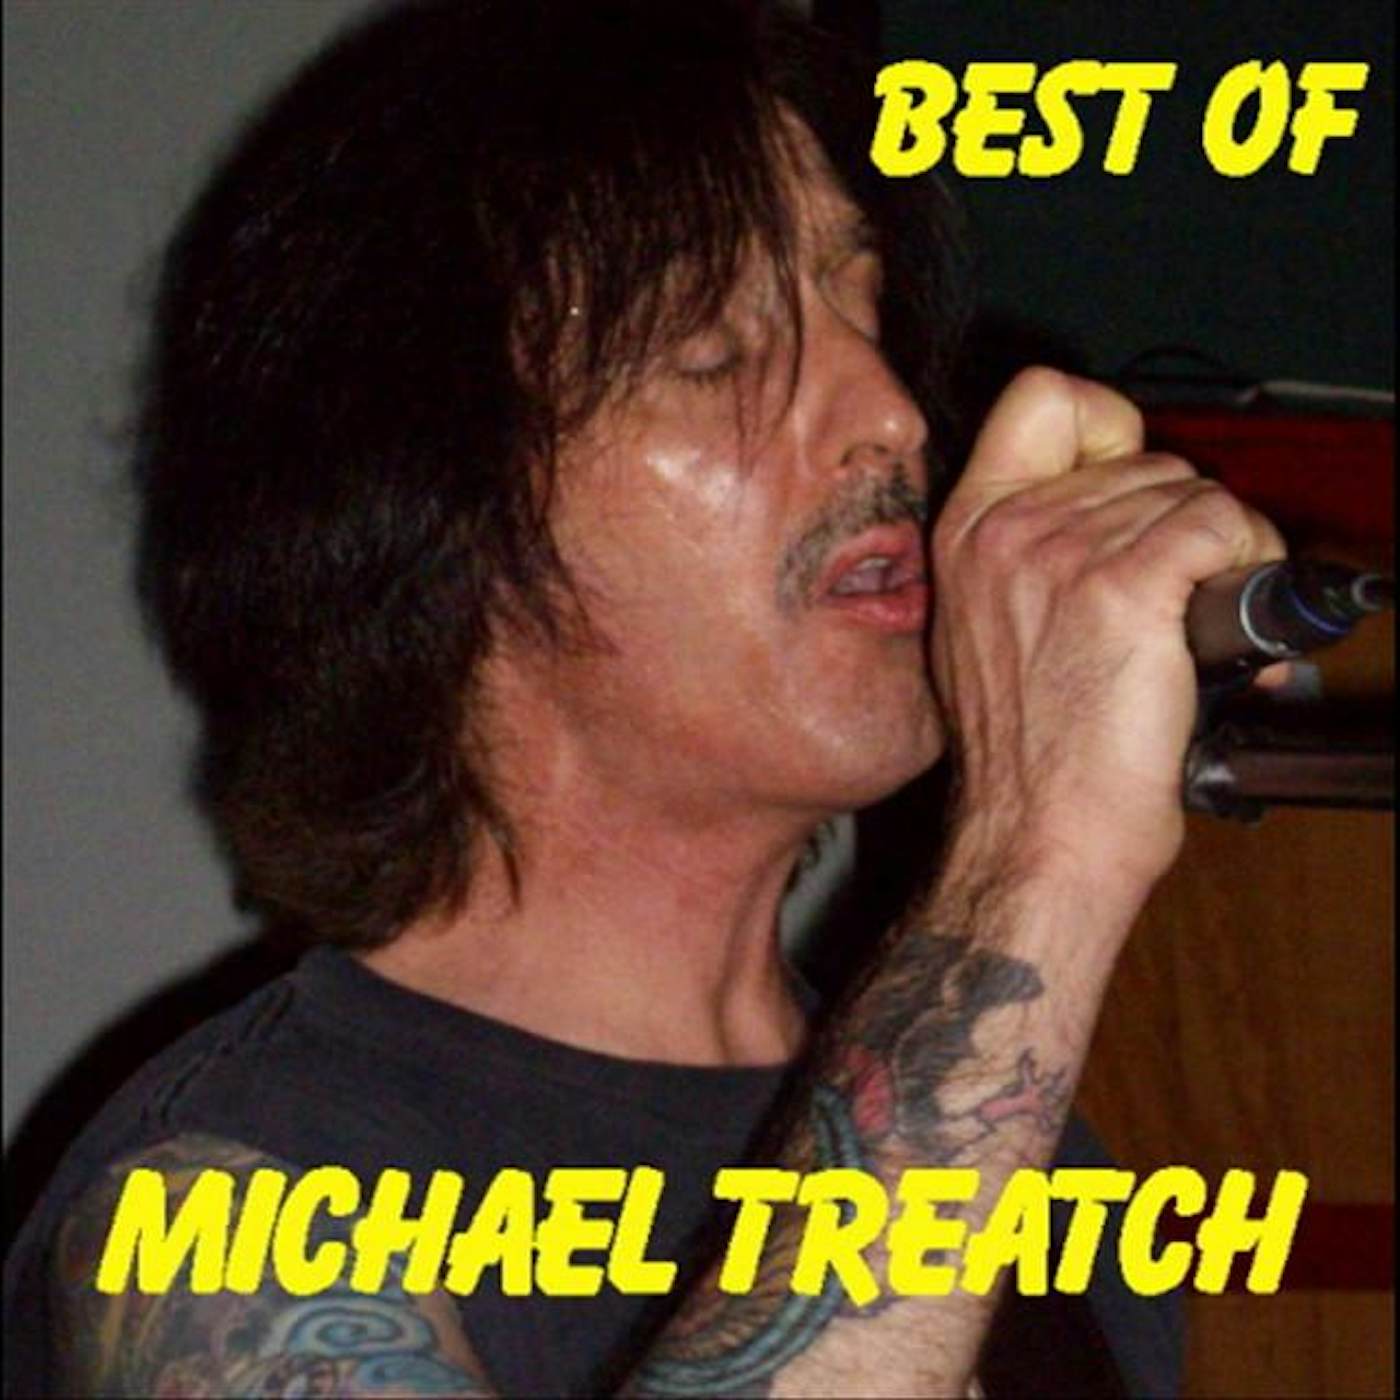 Michael Treatch